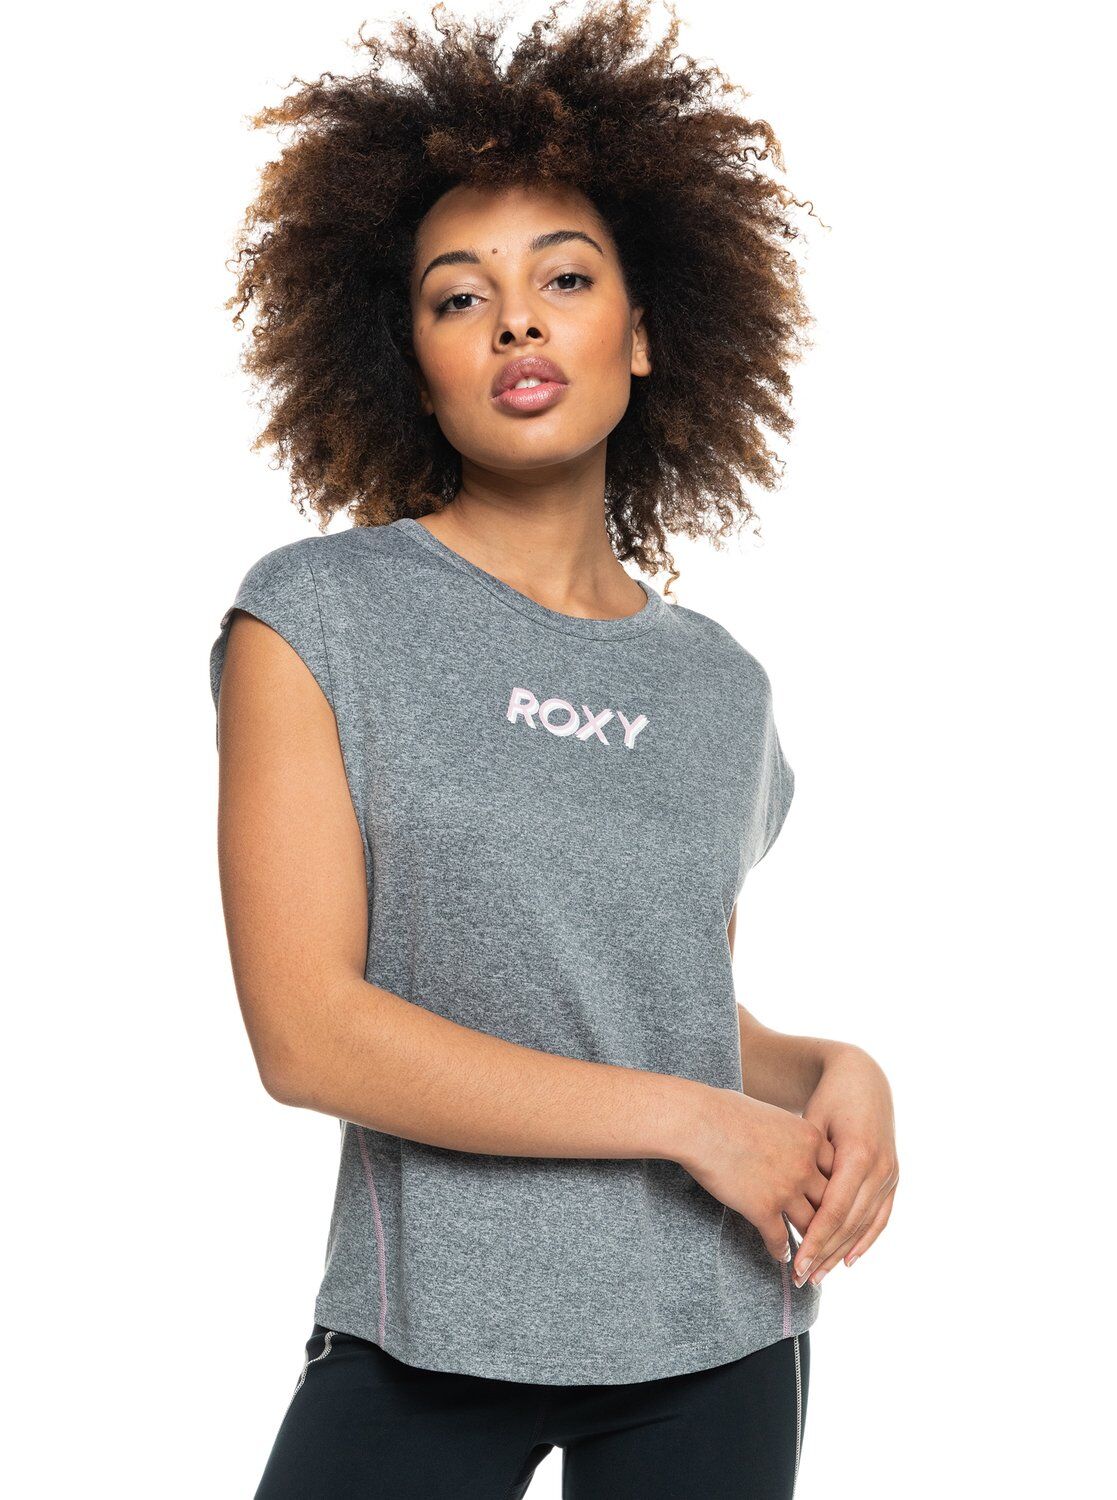 Roxy Trainingsshirt »Training« schwarz Größe L M S XL XS